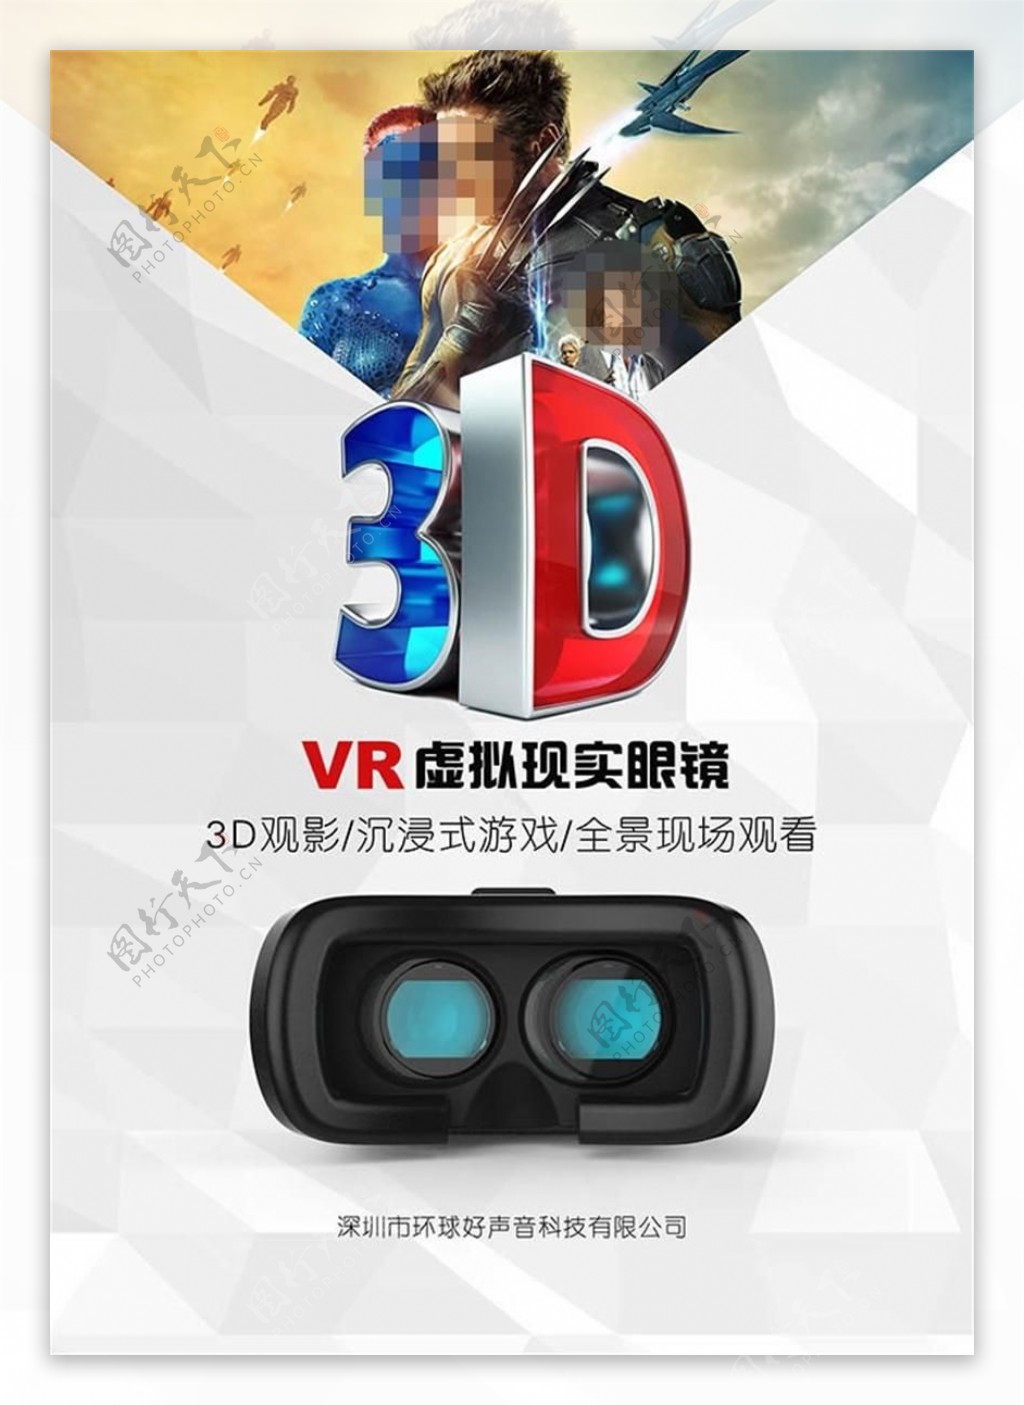 VR虚拟现实眼镜广告设计psd素材